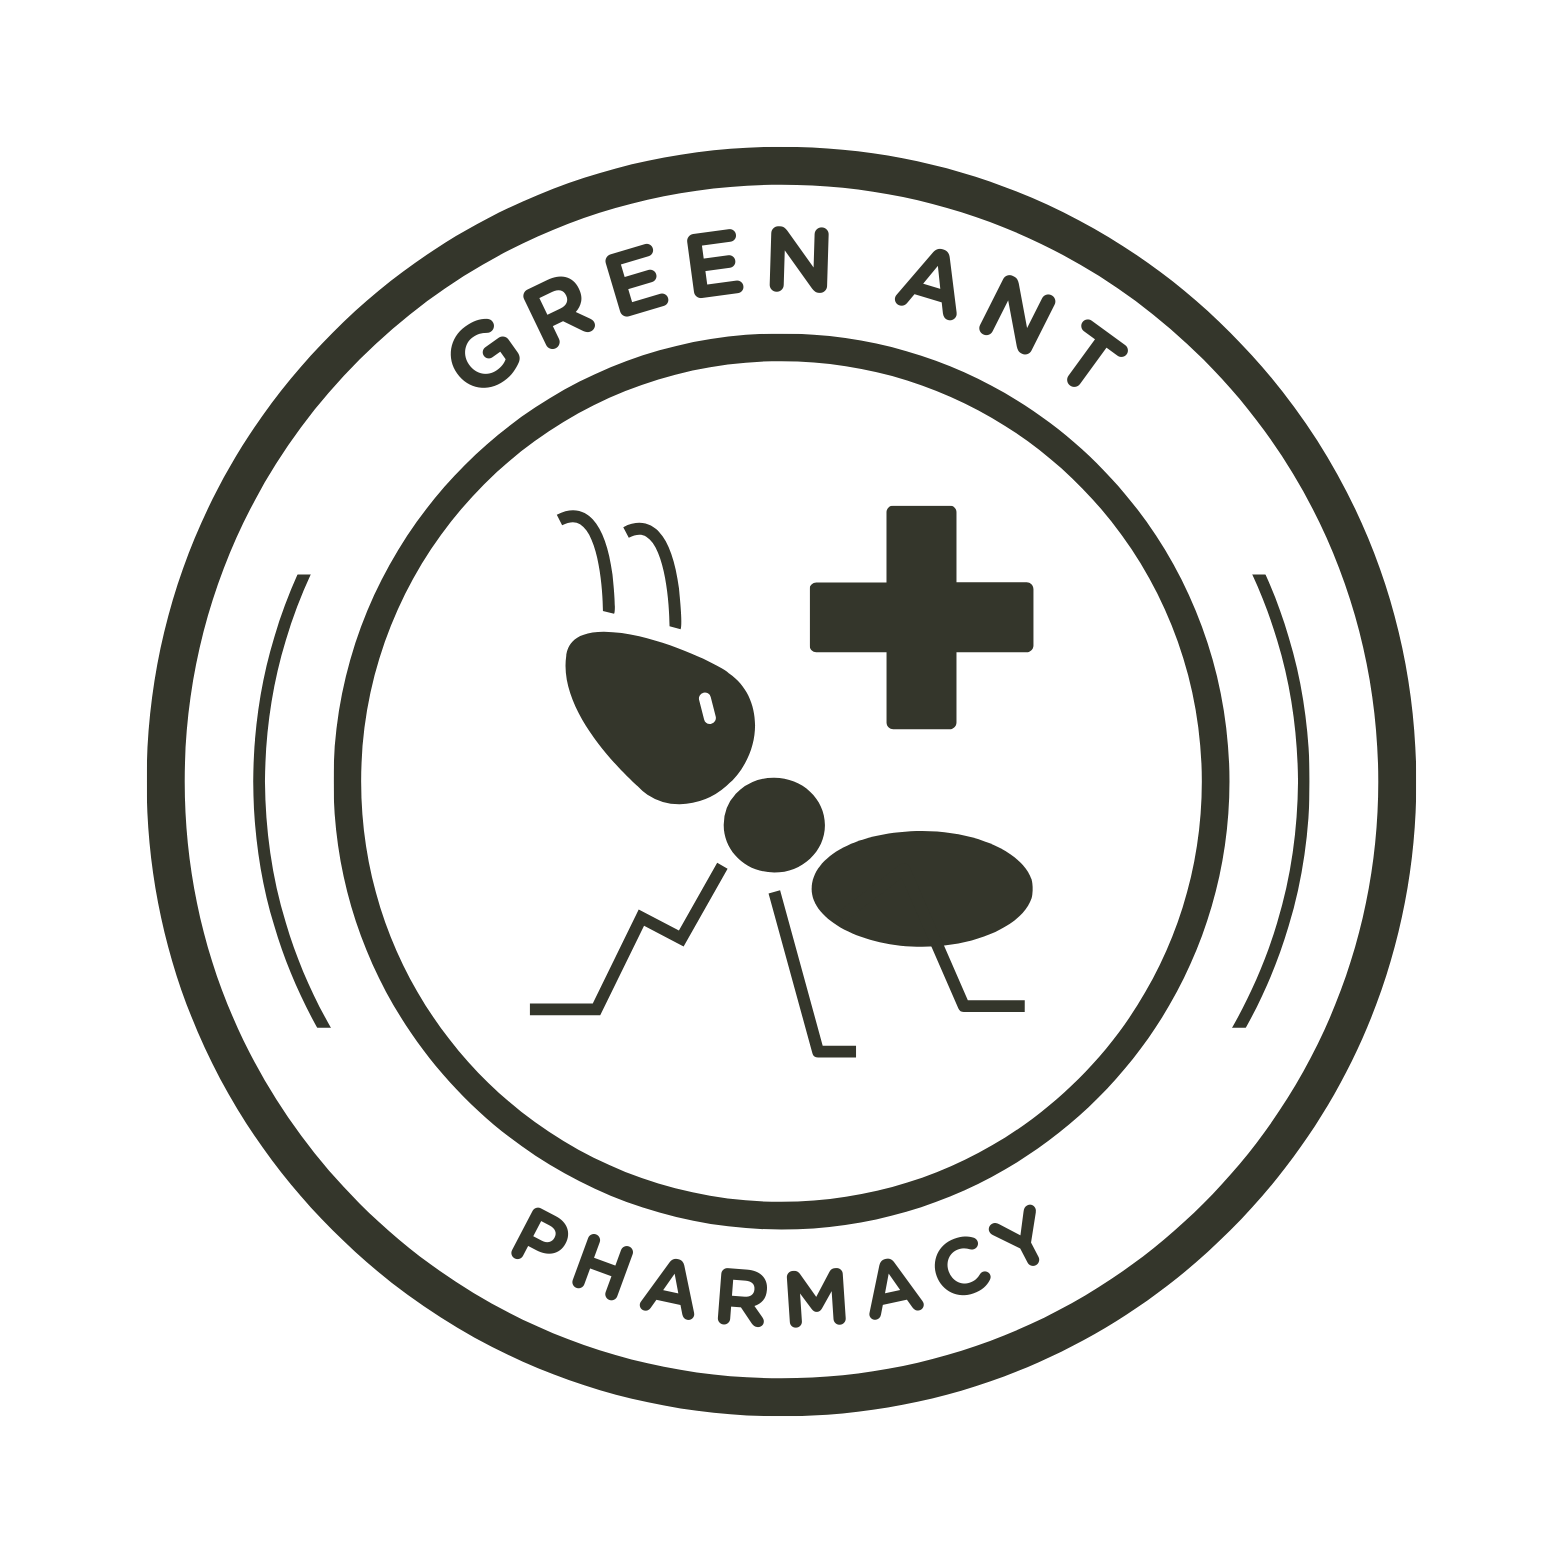 Green Ant Pharmacy